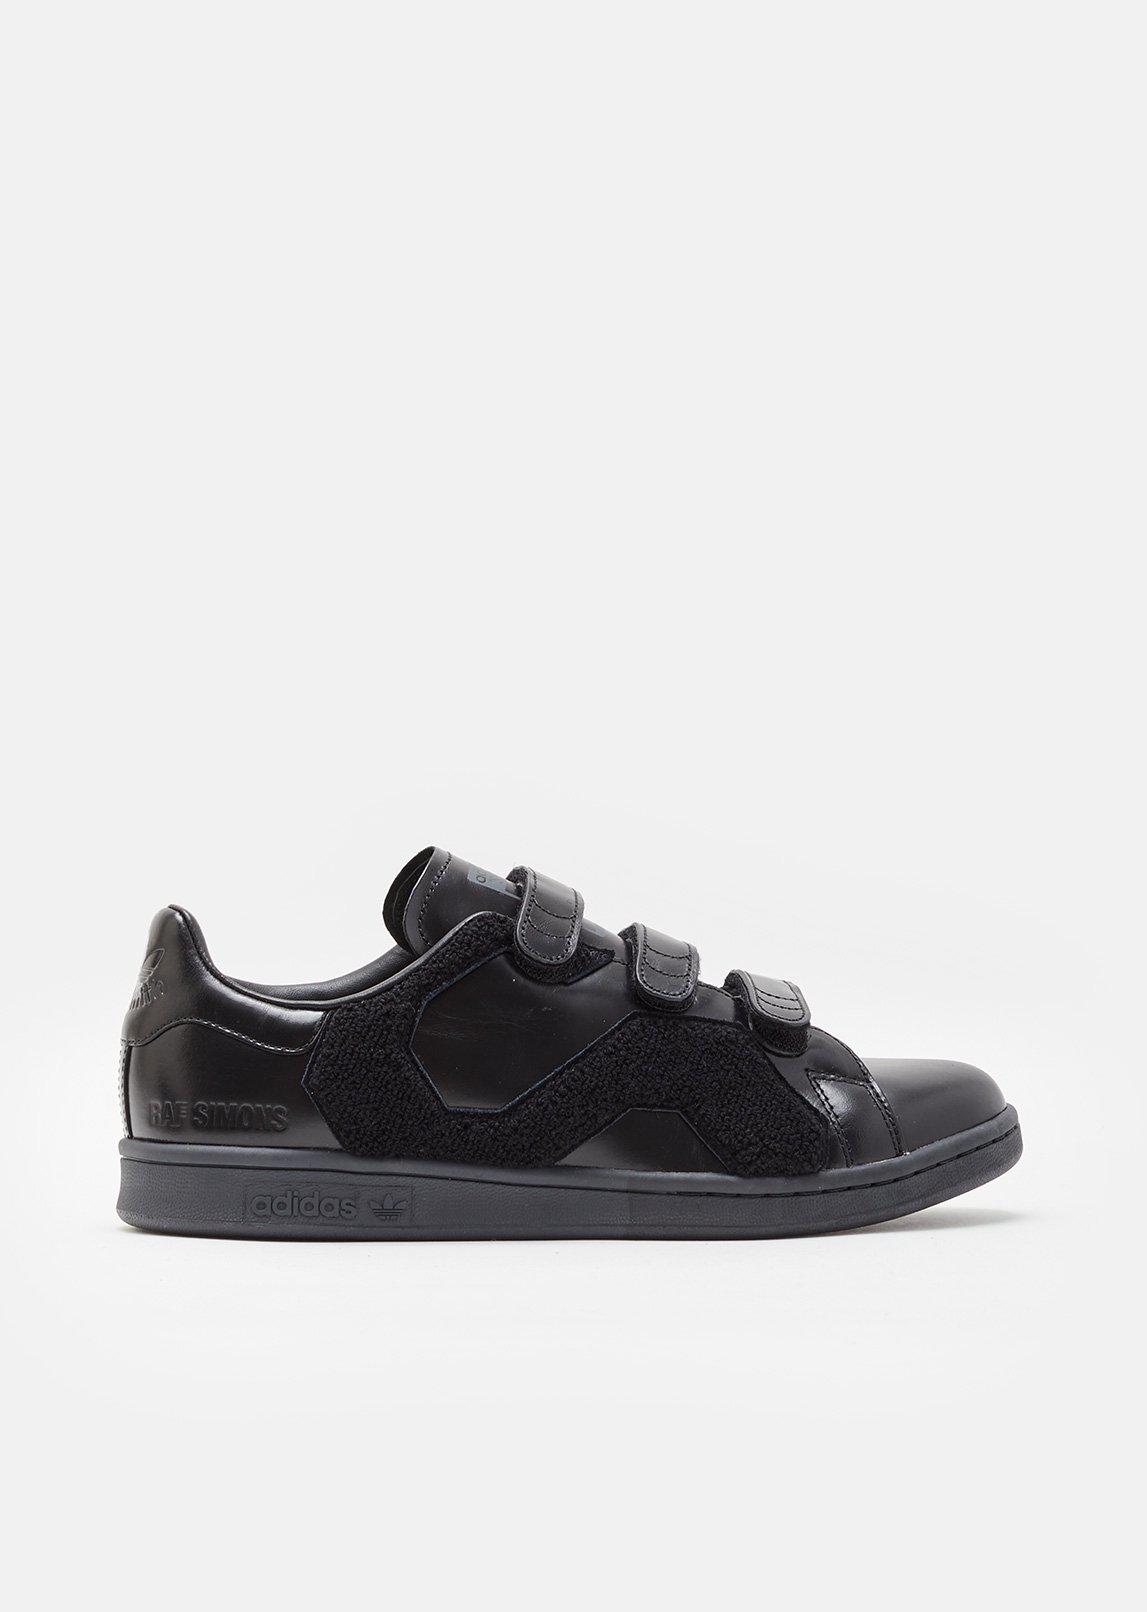 adidas By Raf Simons Stan Smith Velcro Sneakers in Black | Lyst Australia